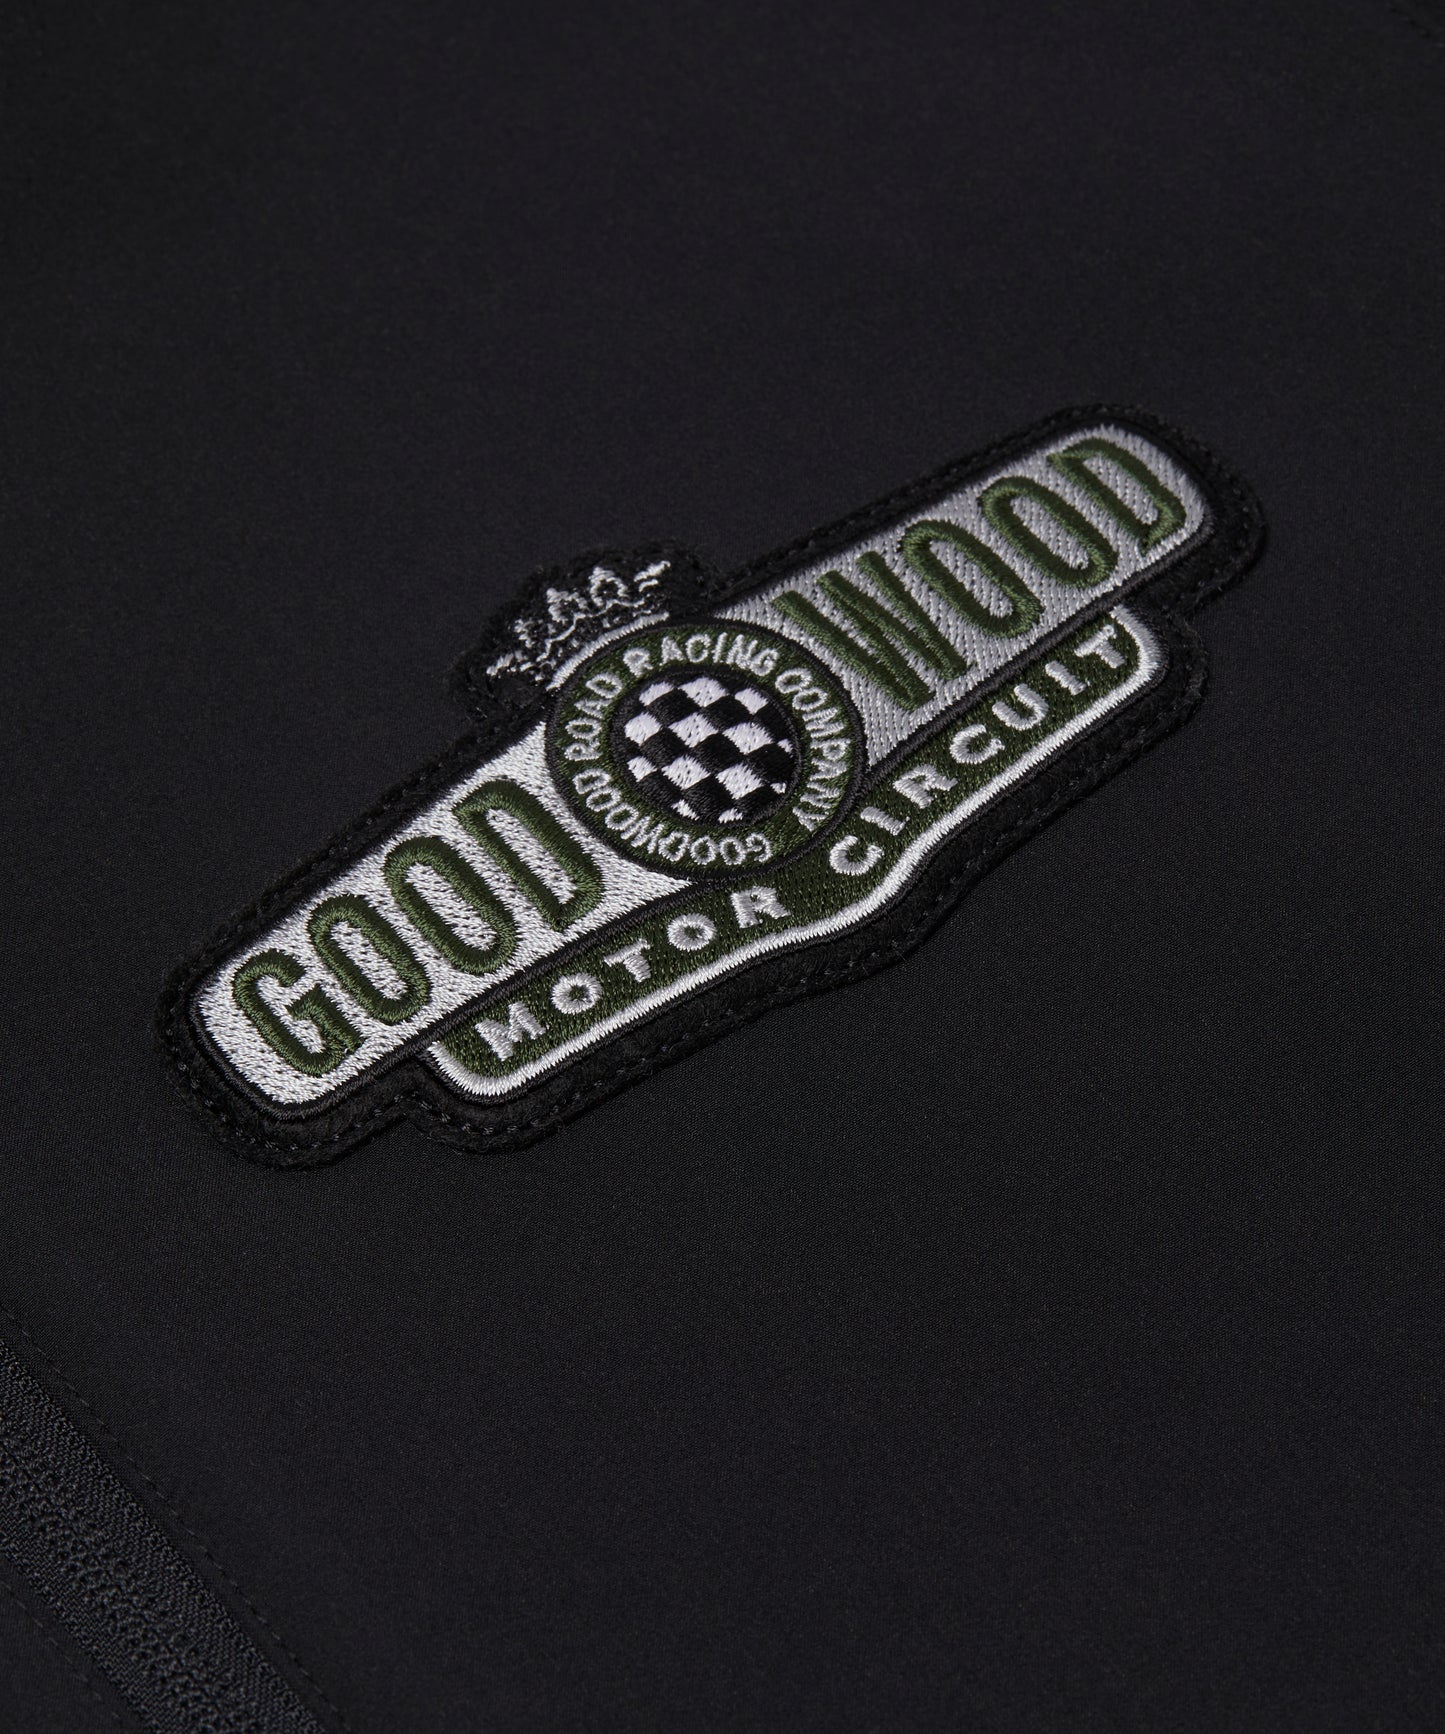 Goodwood Motor Circuit Soft Shell Jacket